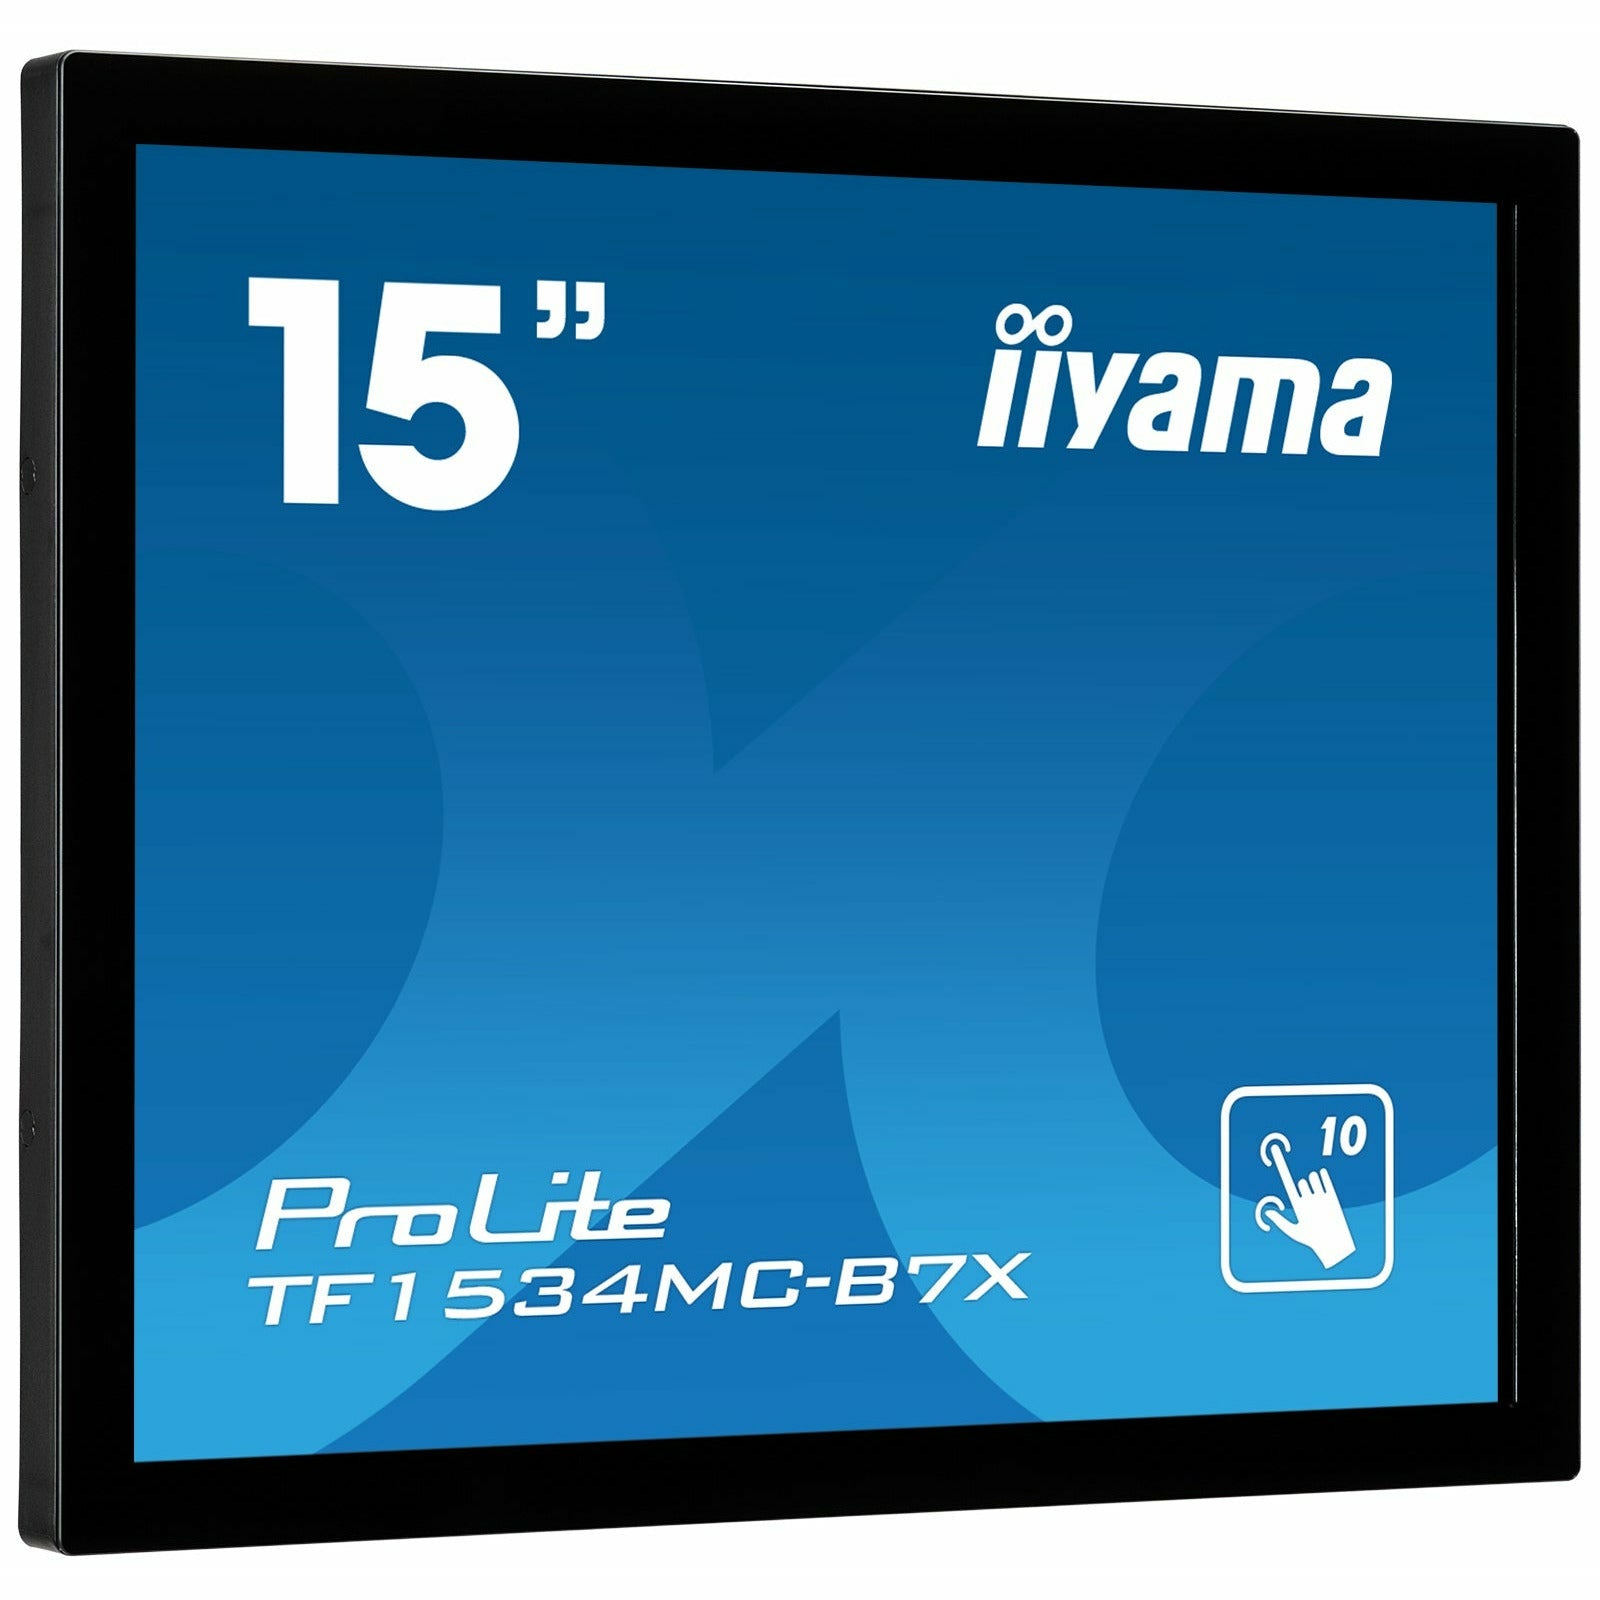 iiyama ProLite TF1534MC-B7X 15" Capacitive Touch Screen Display